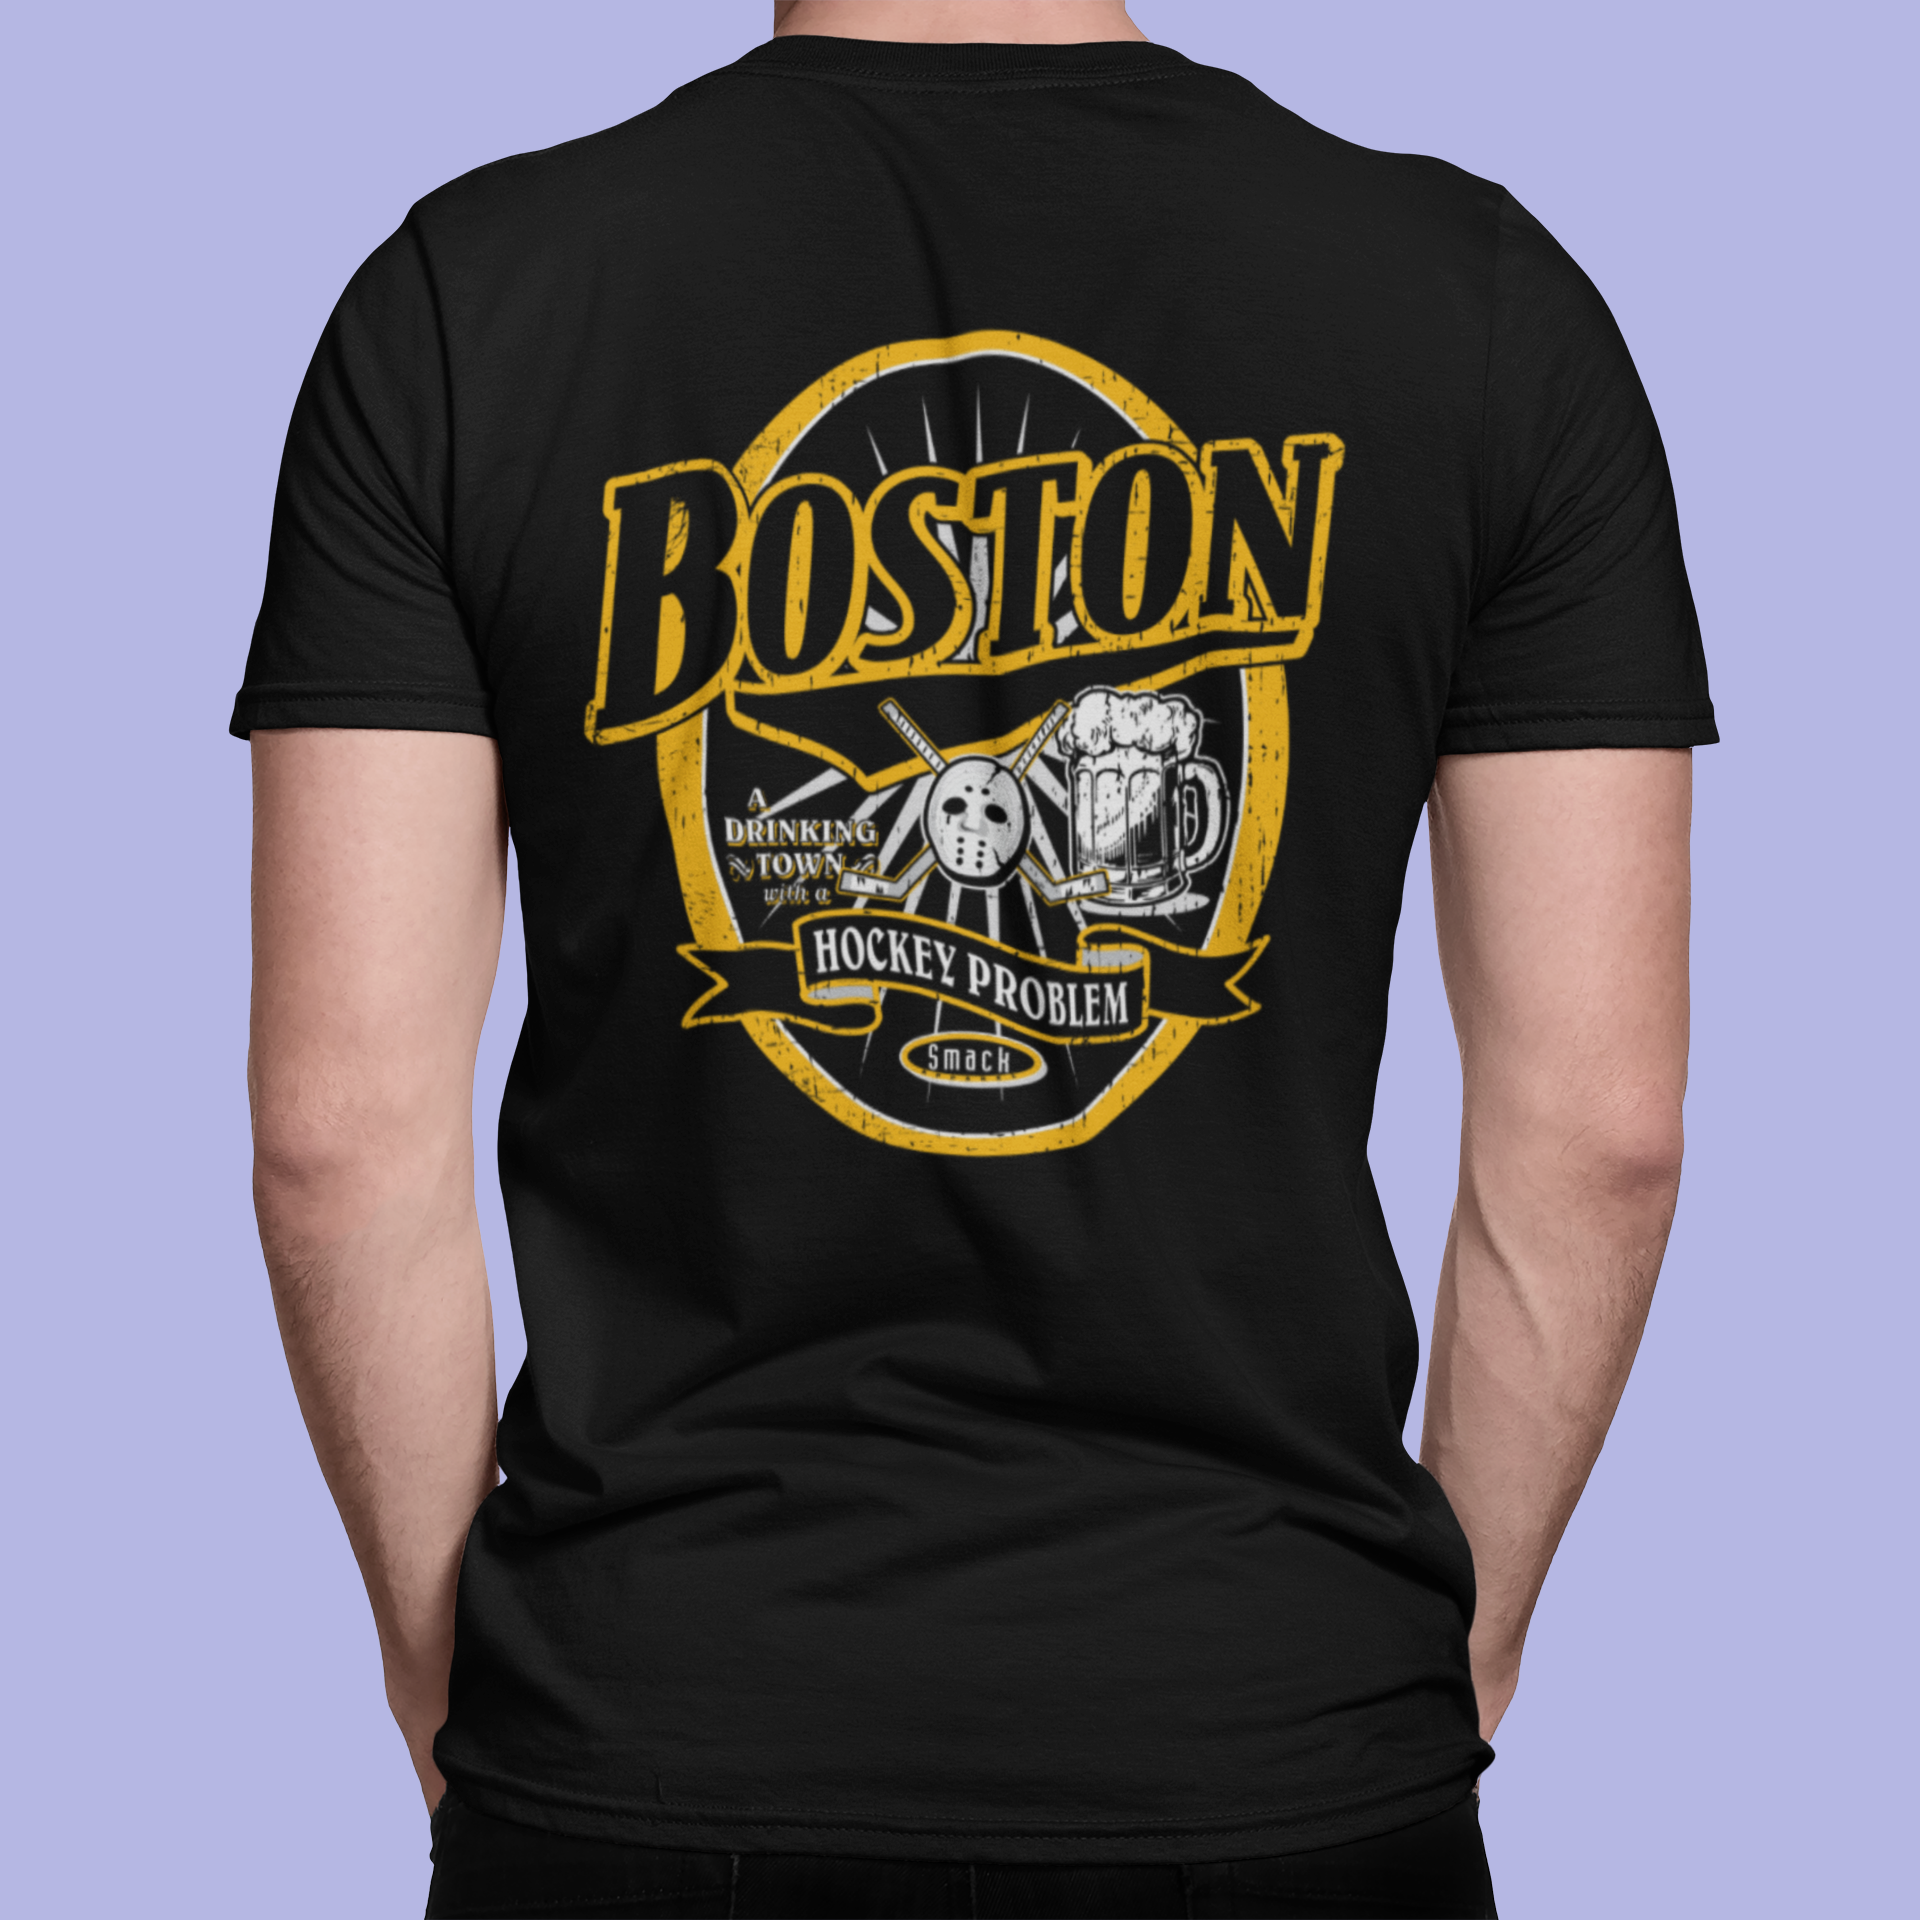 Boston Bruins NHL Youth Boys Pick Color Short Sleeve Team T-Shirts: S-XL